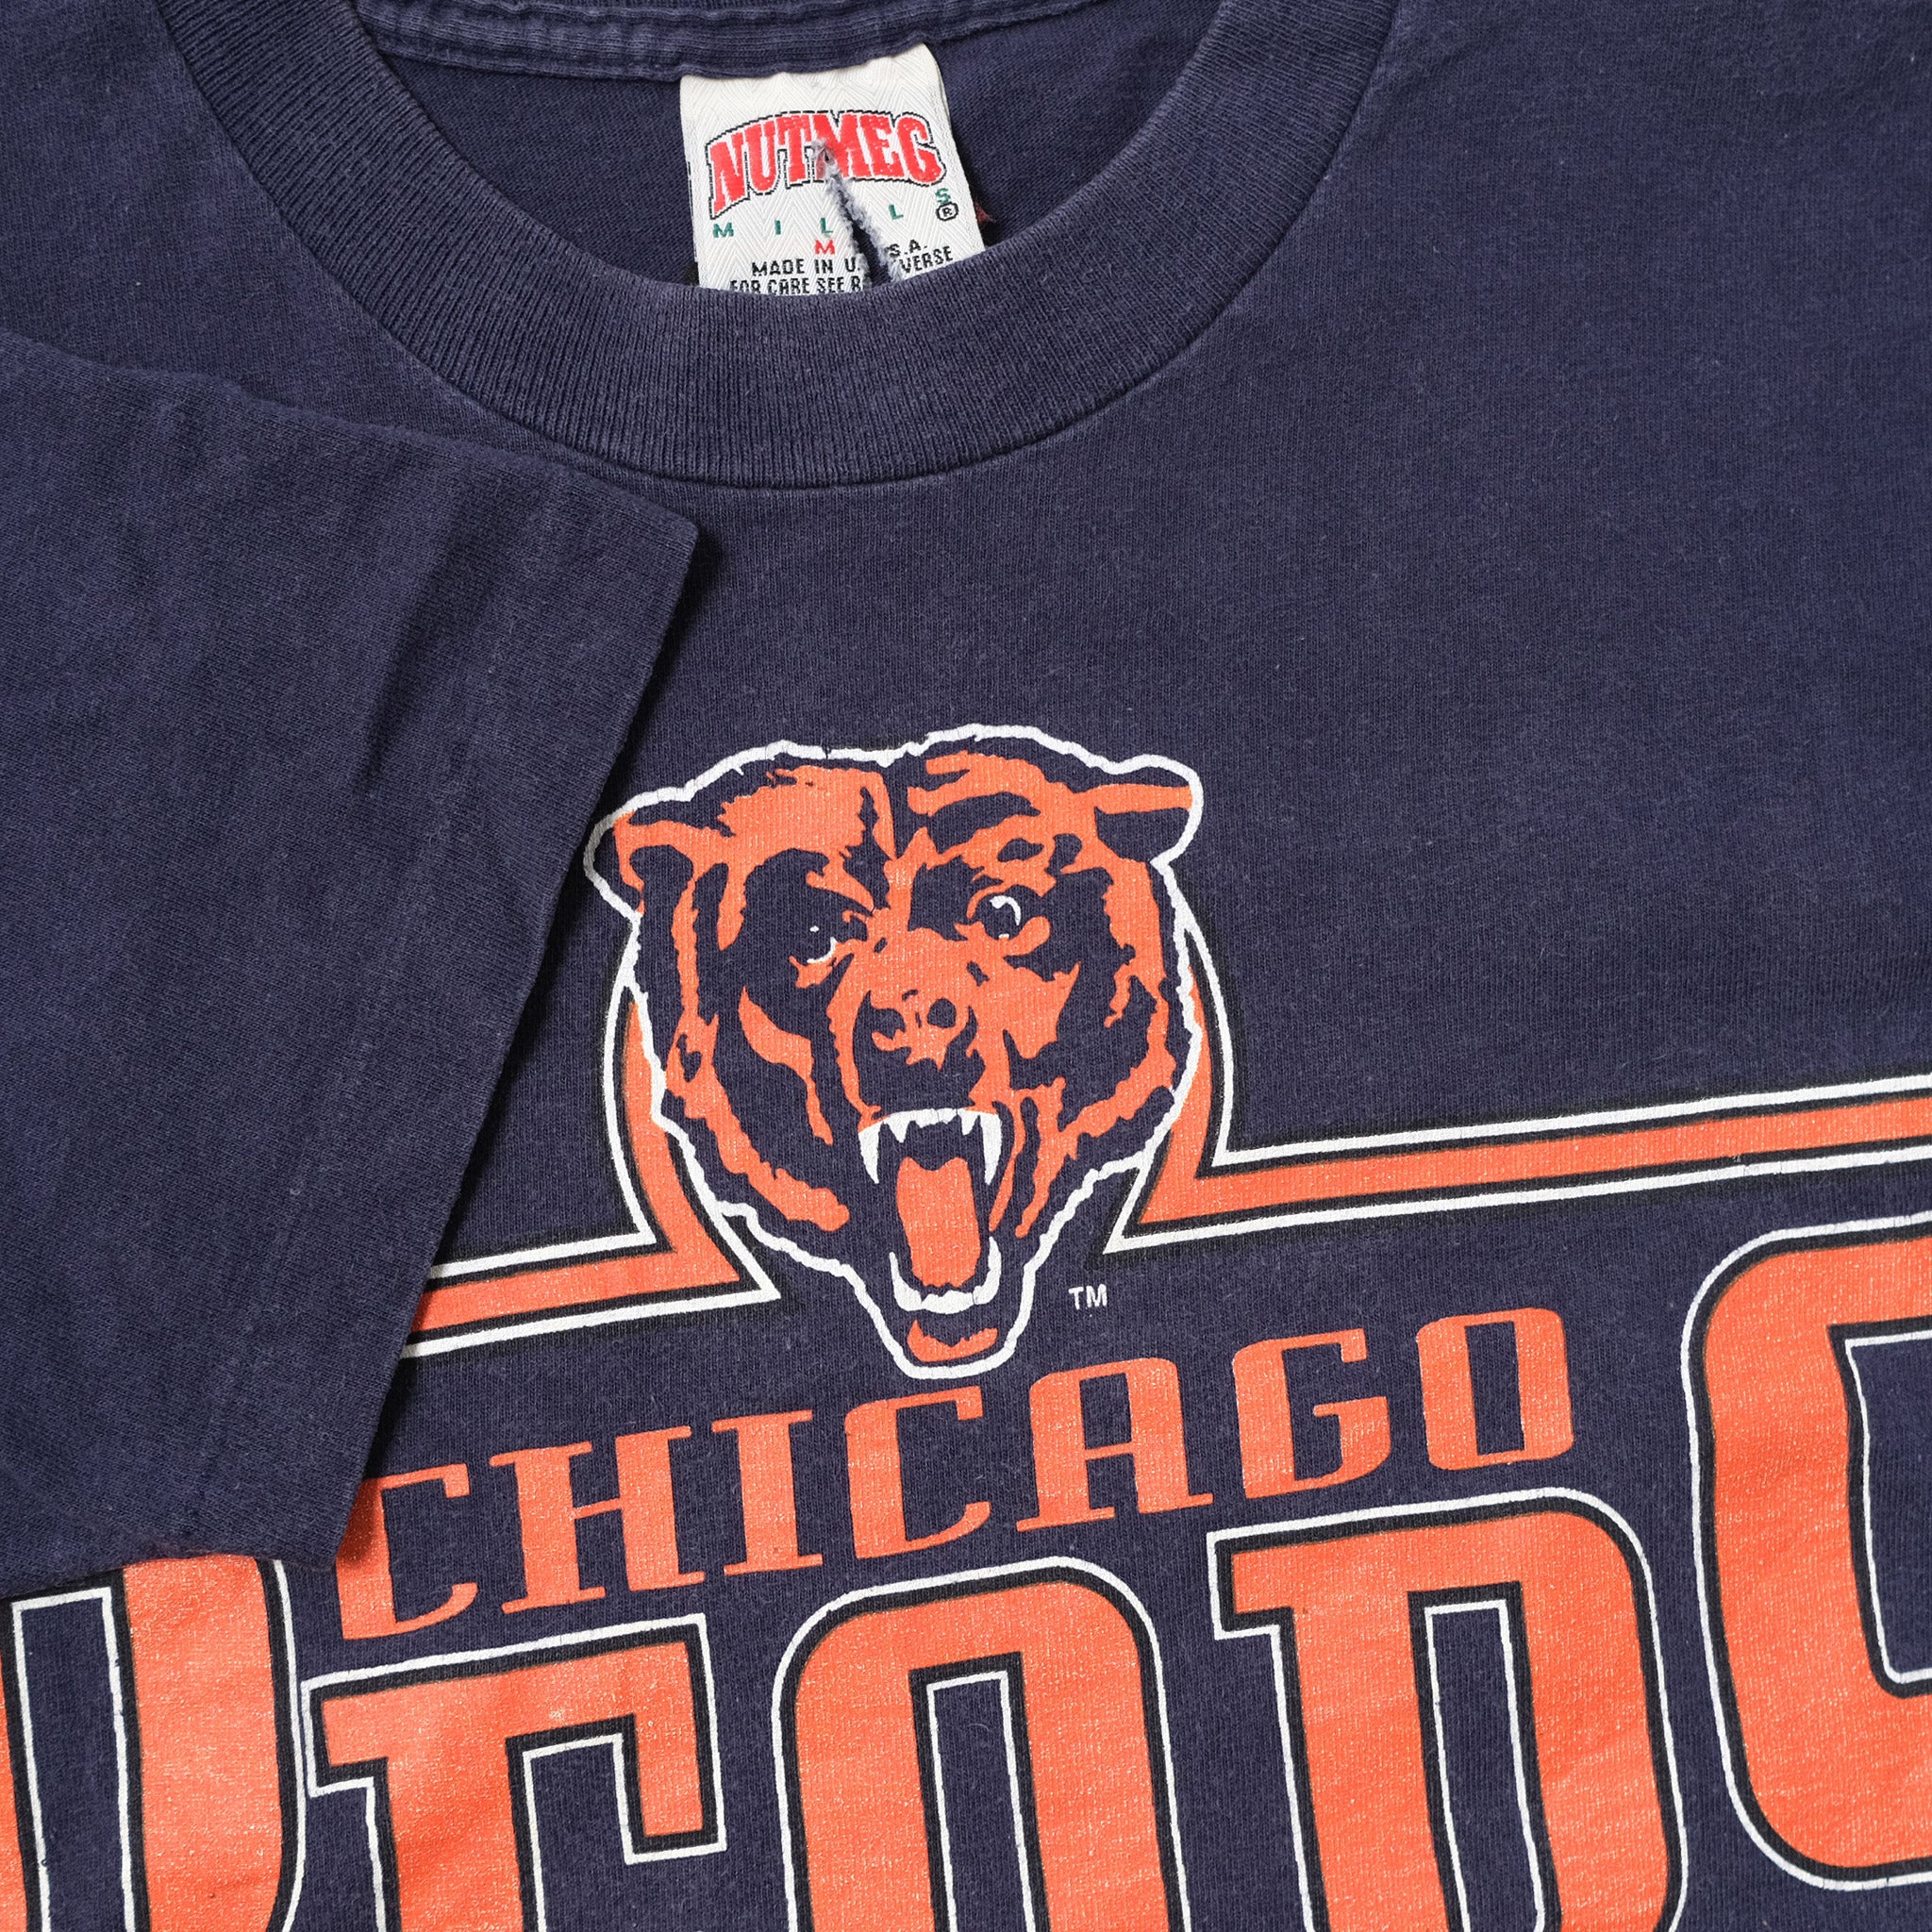 chicago bears retro t shirts